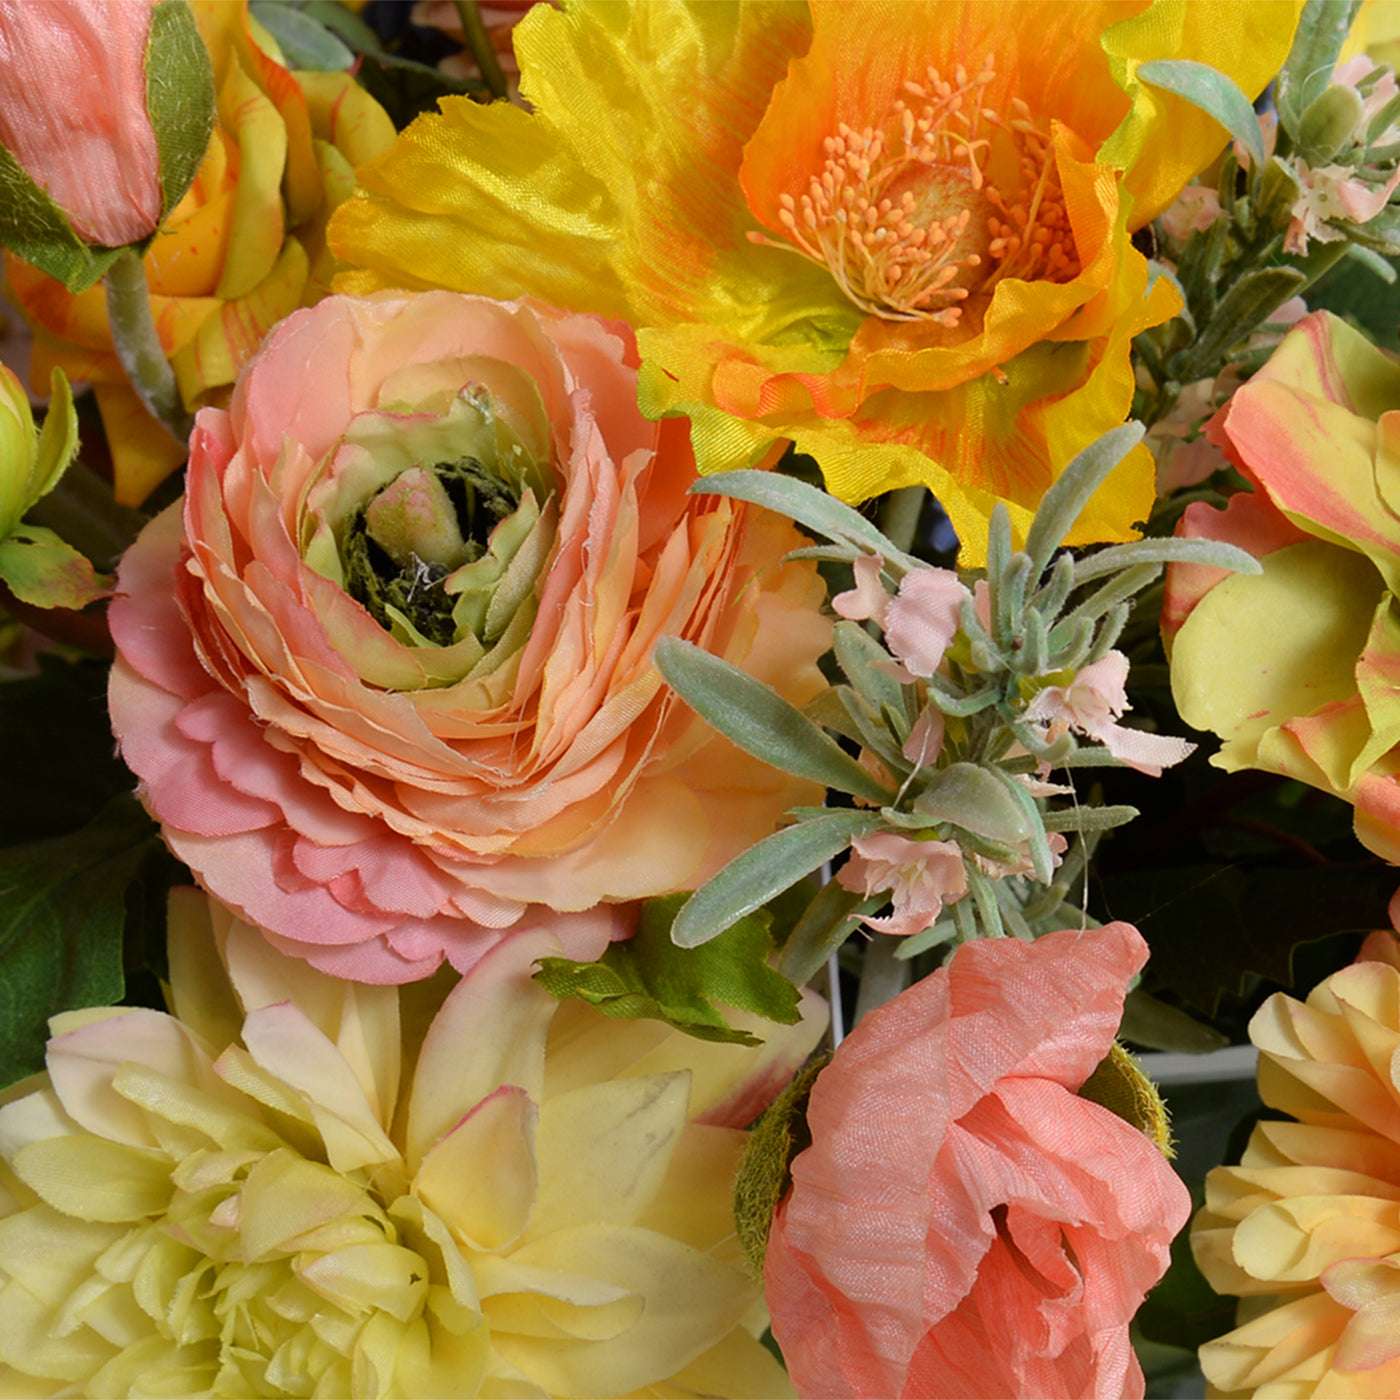 Mixed Flowers Arrangement in Glass -Yellow/Orange/Mauve